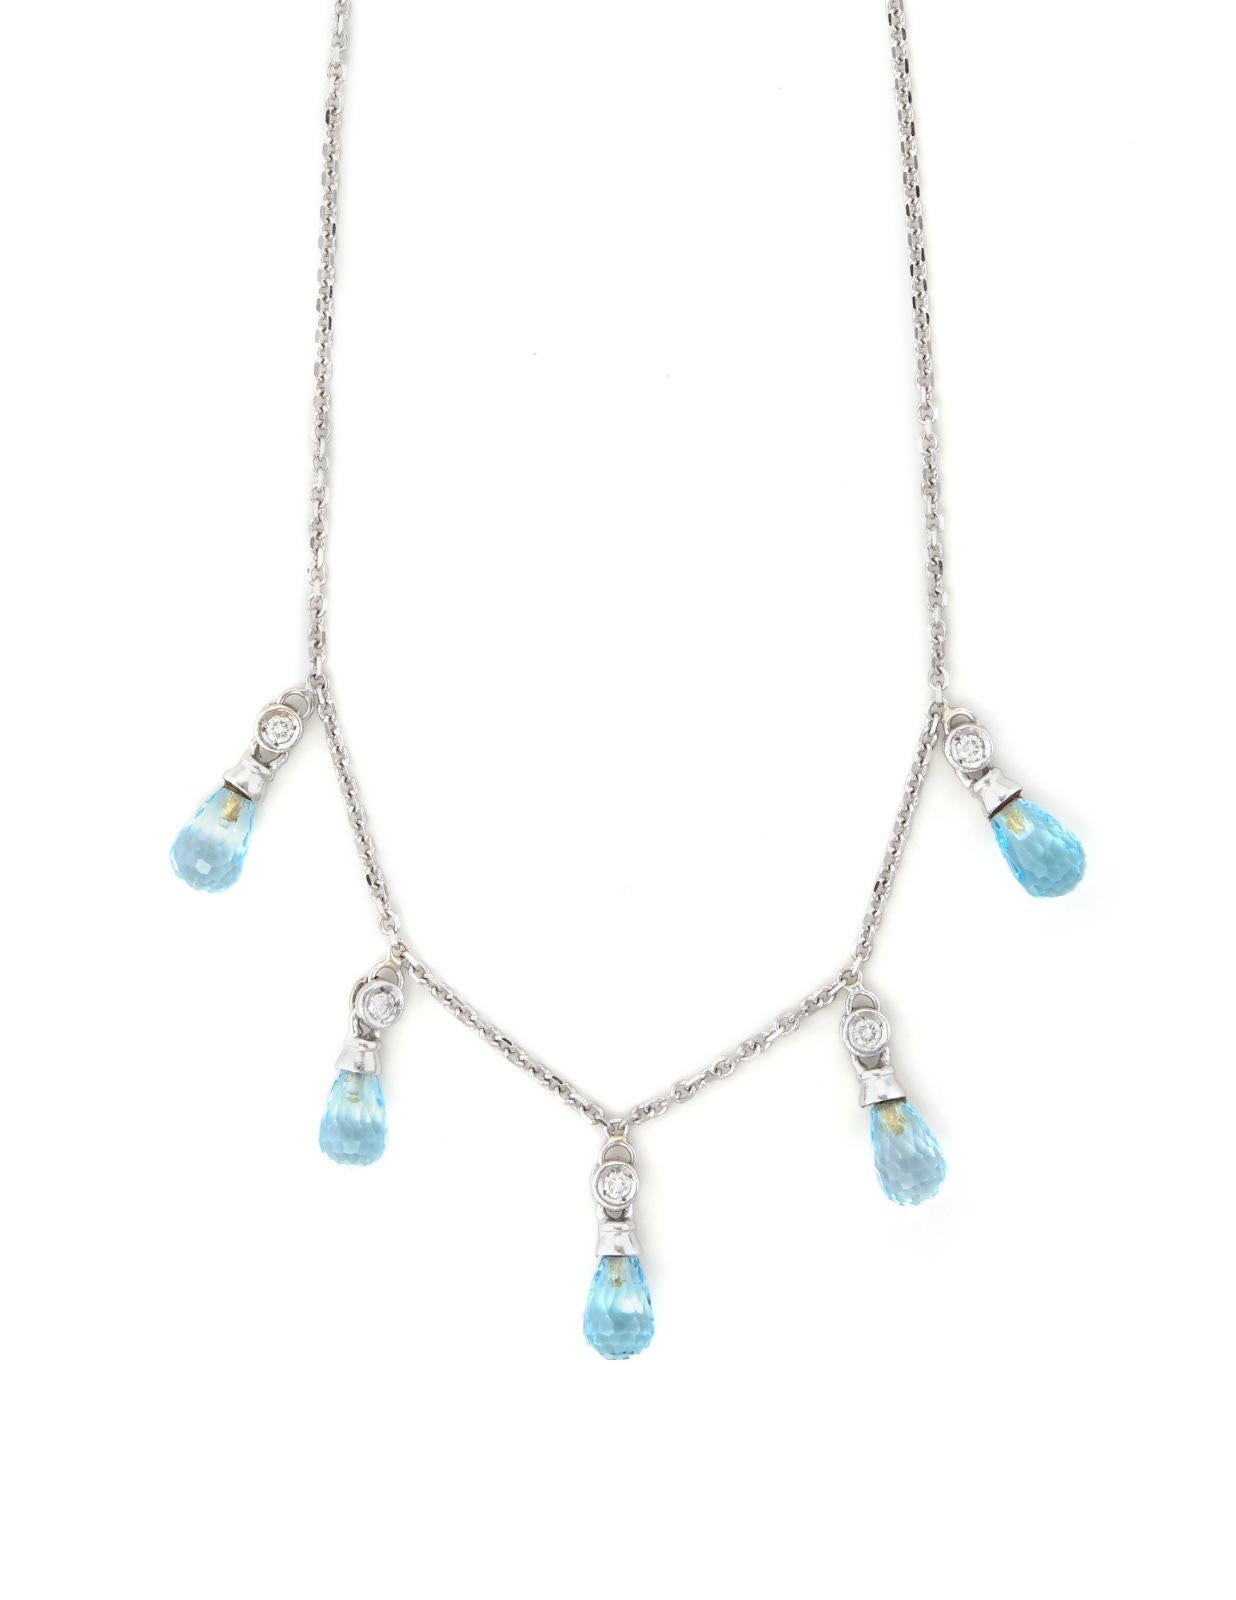 jilco blue topaz necklace